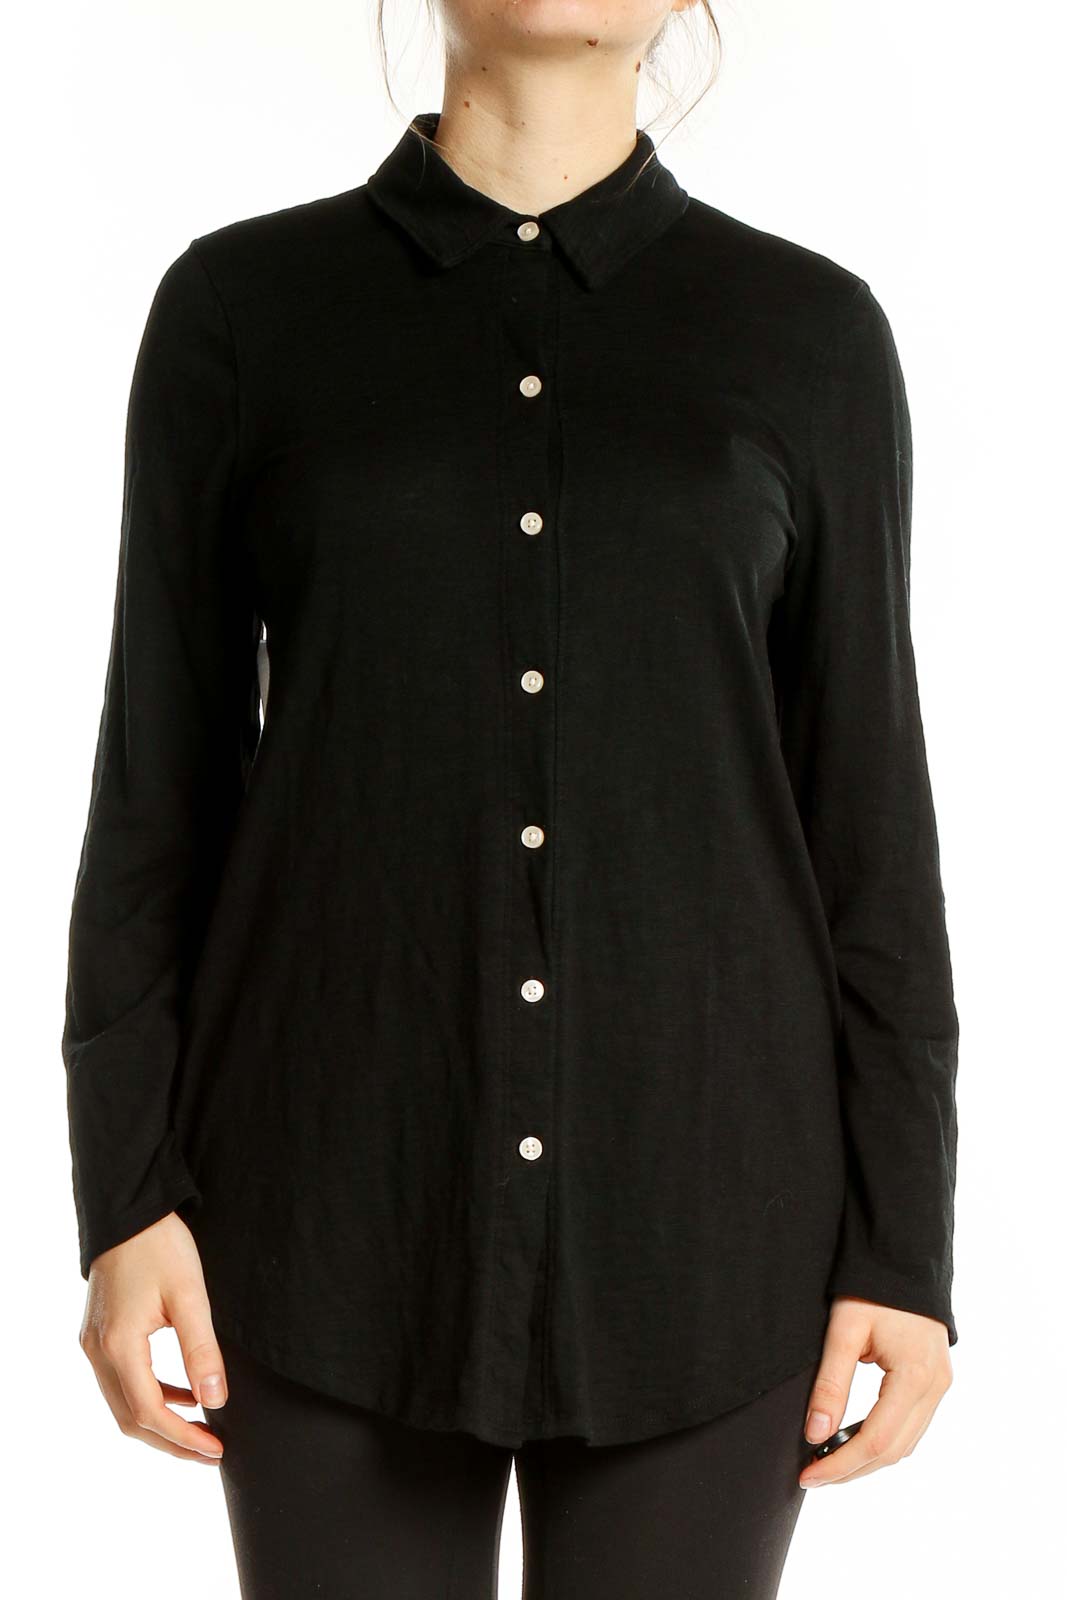 Black Long Sleeve Shirt Front